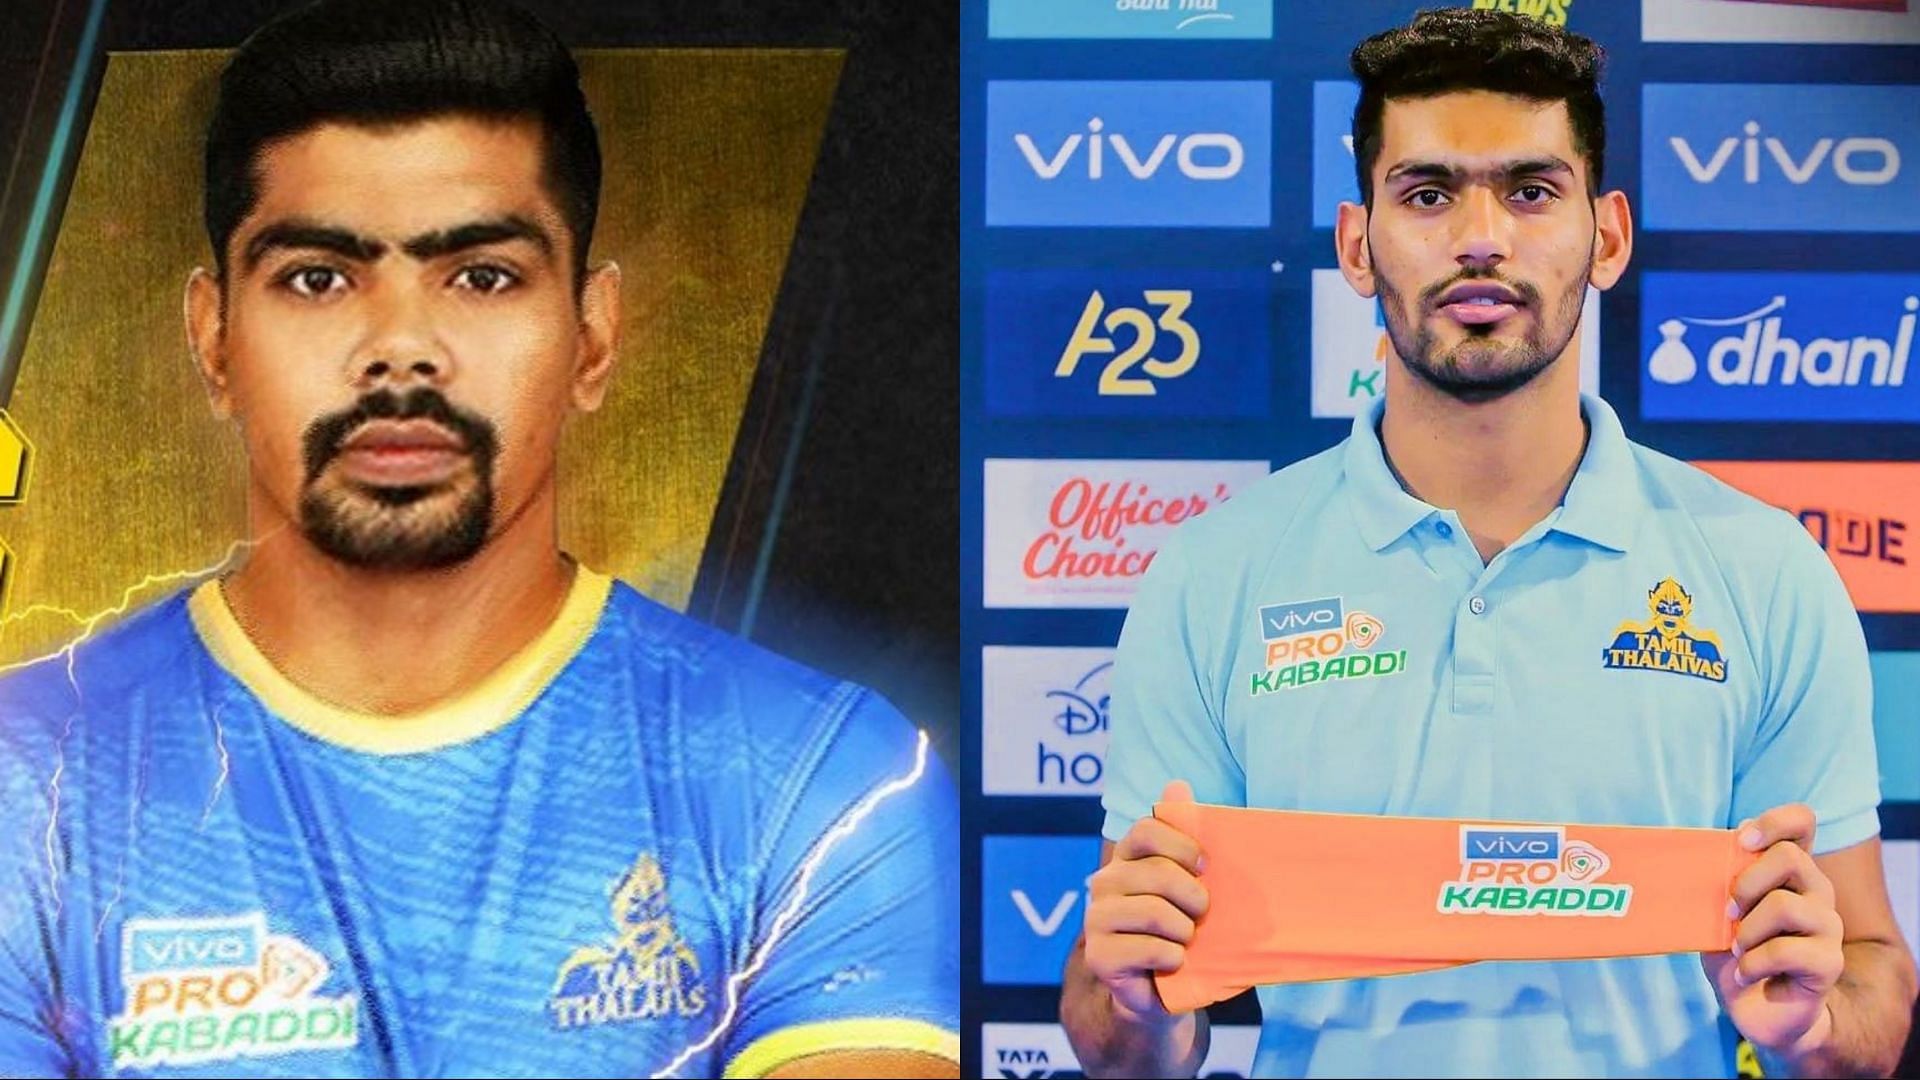 Tamil Thalaivas have some big names like Pawan Kumar Sehrawat and Sagar Rathee in their squad this year (Image Source: Instagram)